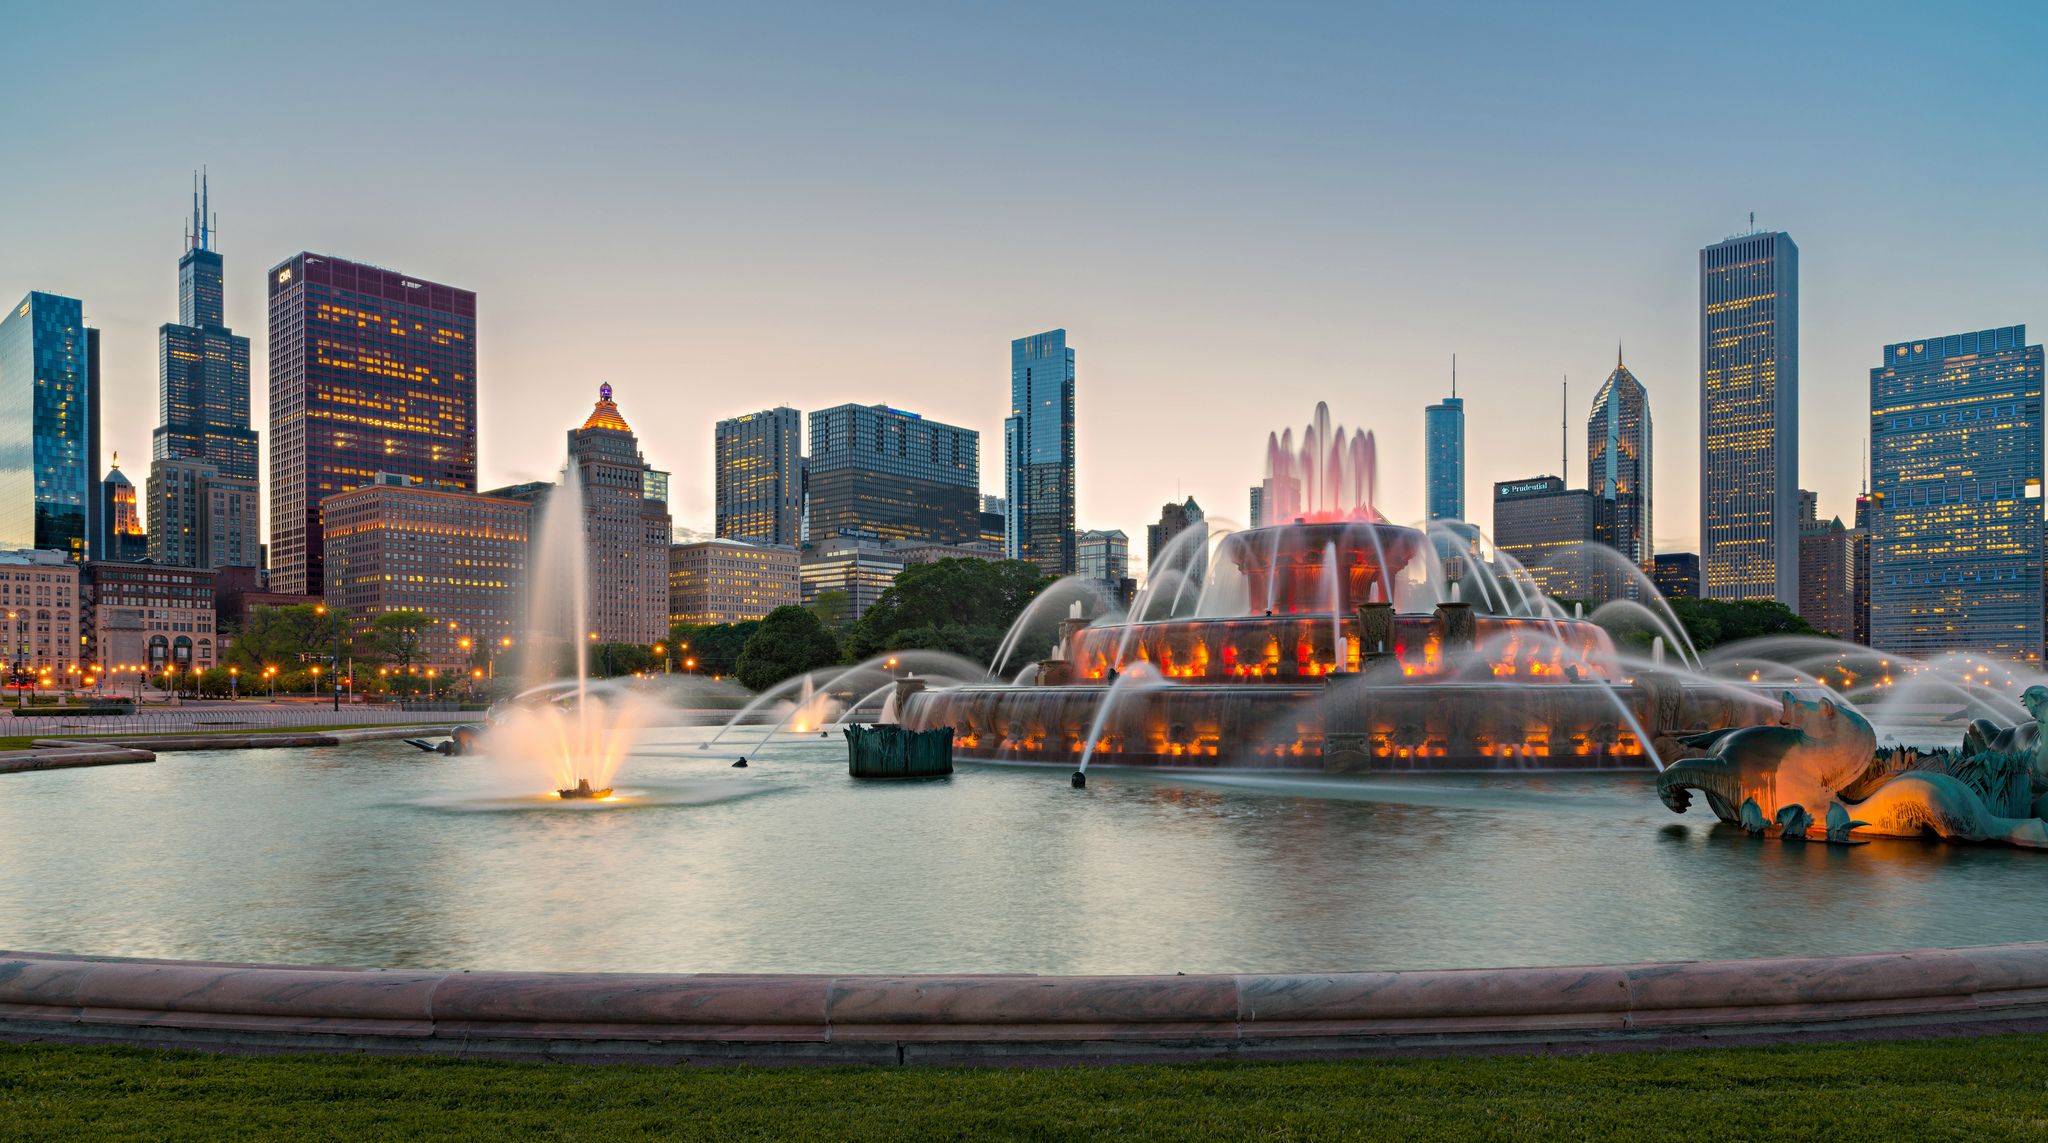 Fountain Chicago City 2048x1143